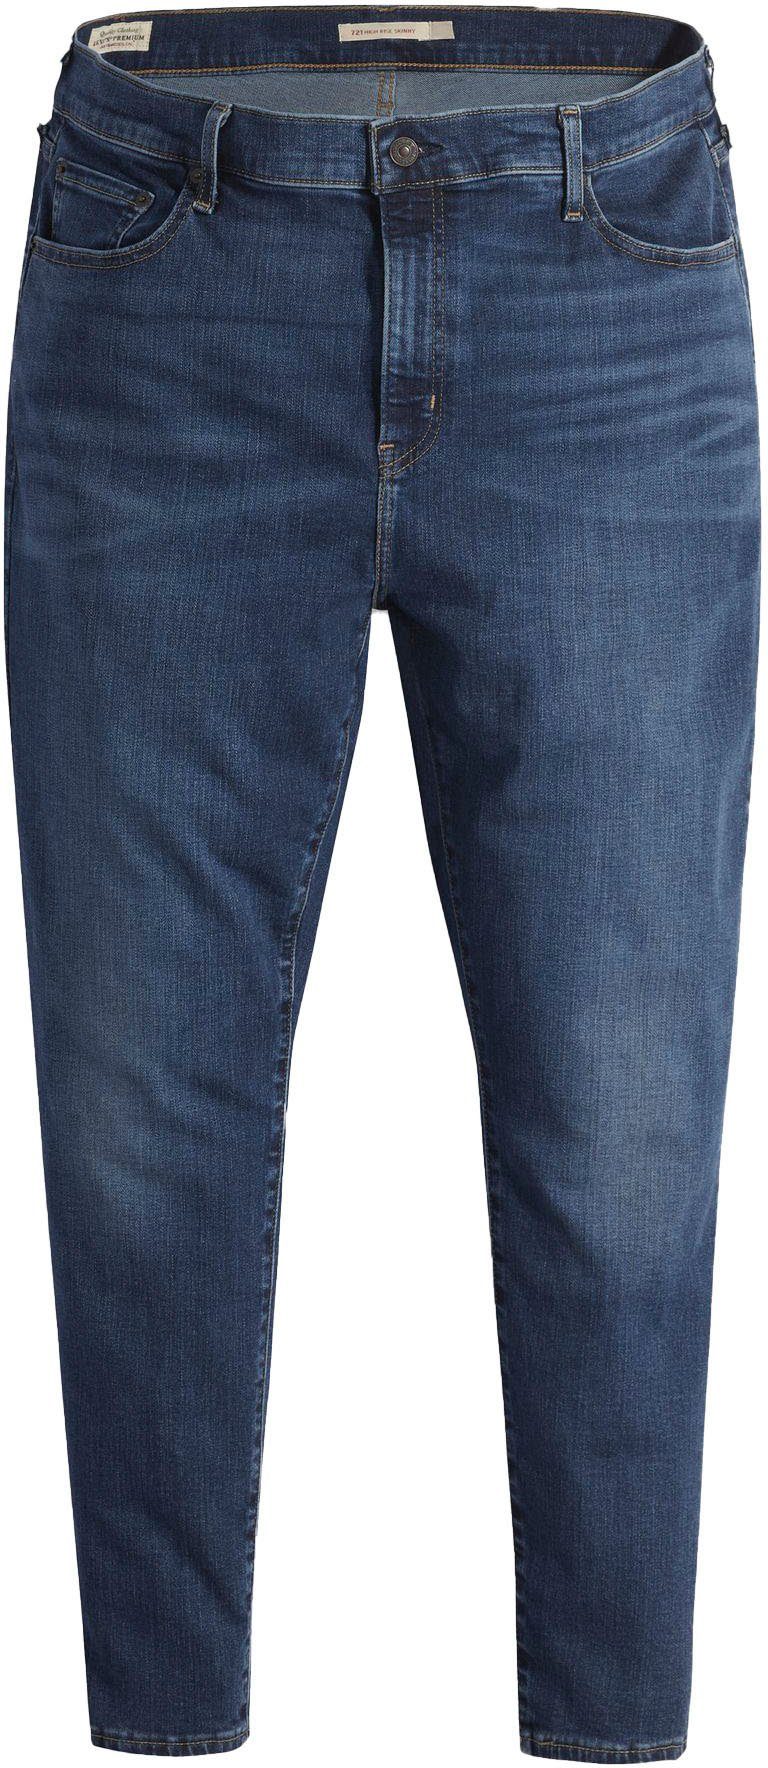 HI PL figurbetonter 721 dark sehr blue Skinny-fit-Jeans RISE SKINNY Schnitt Levi's® Plus